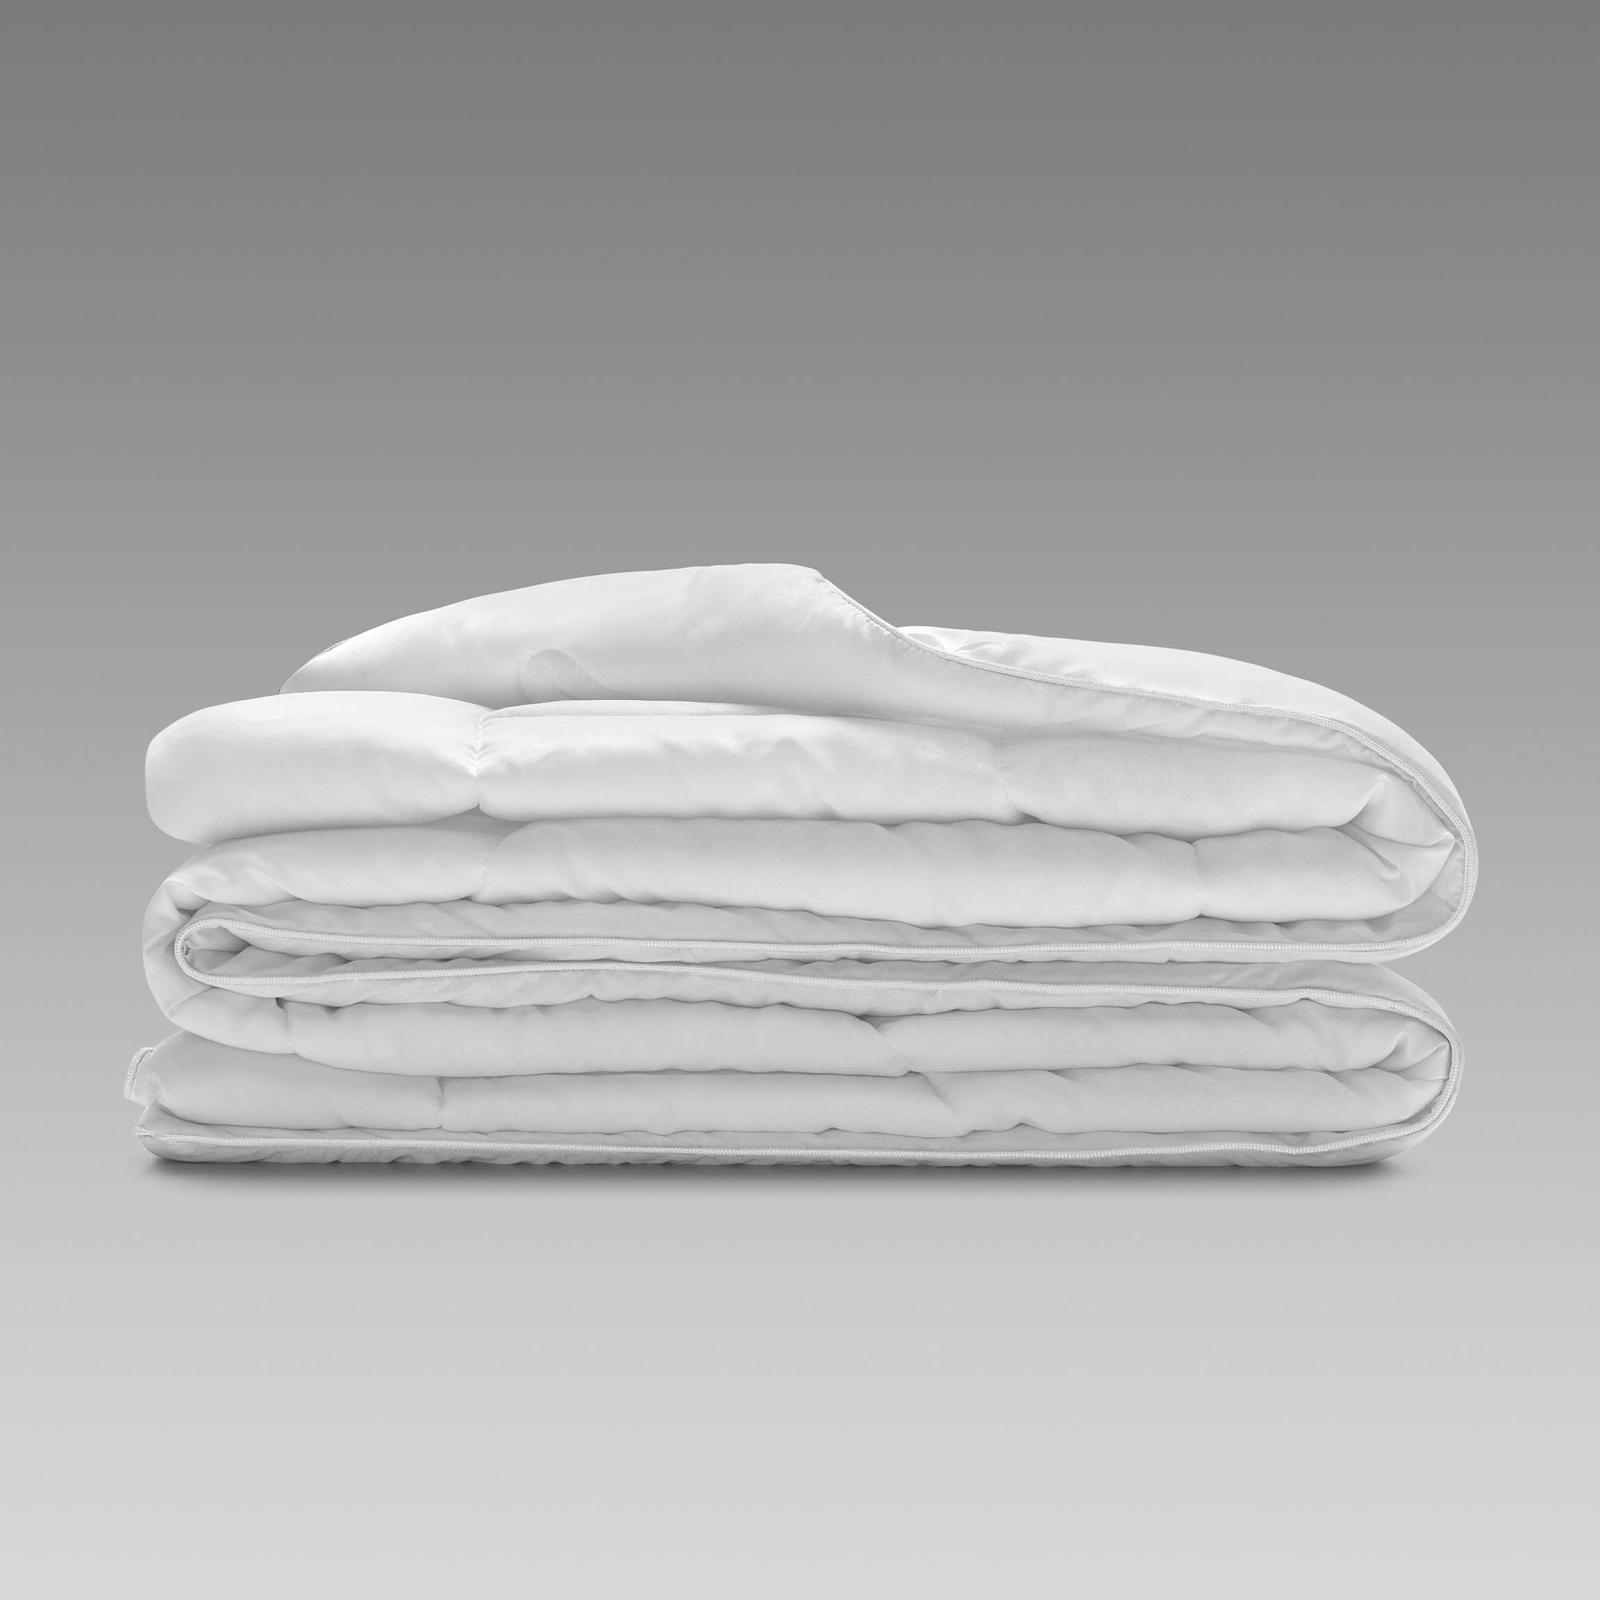 Одеяло Гелиос 200х210 Togas, цвет белый, размер 200х210 см - фото 2